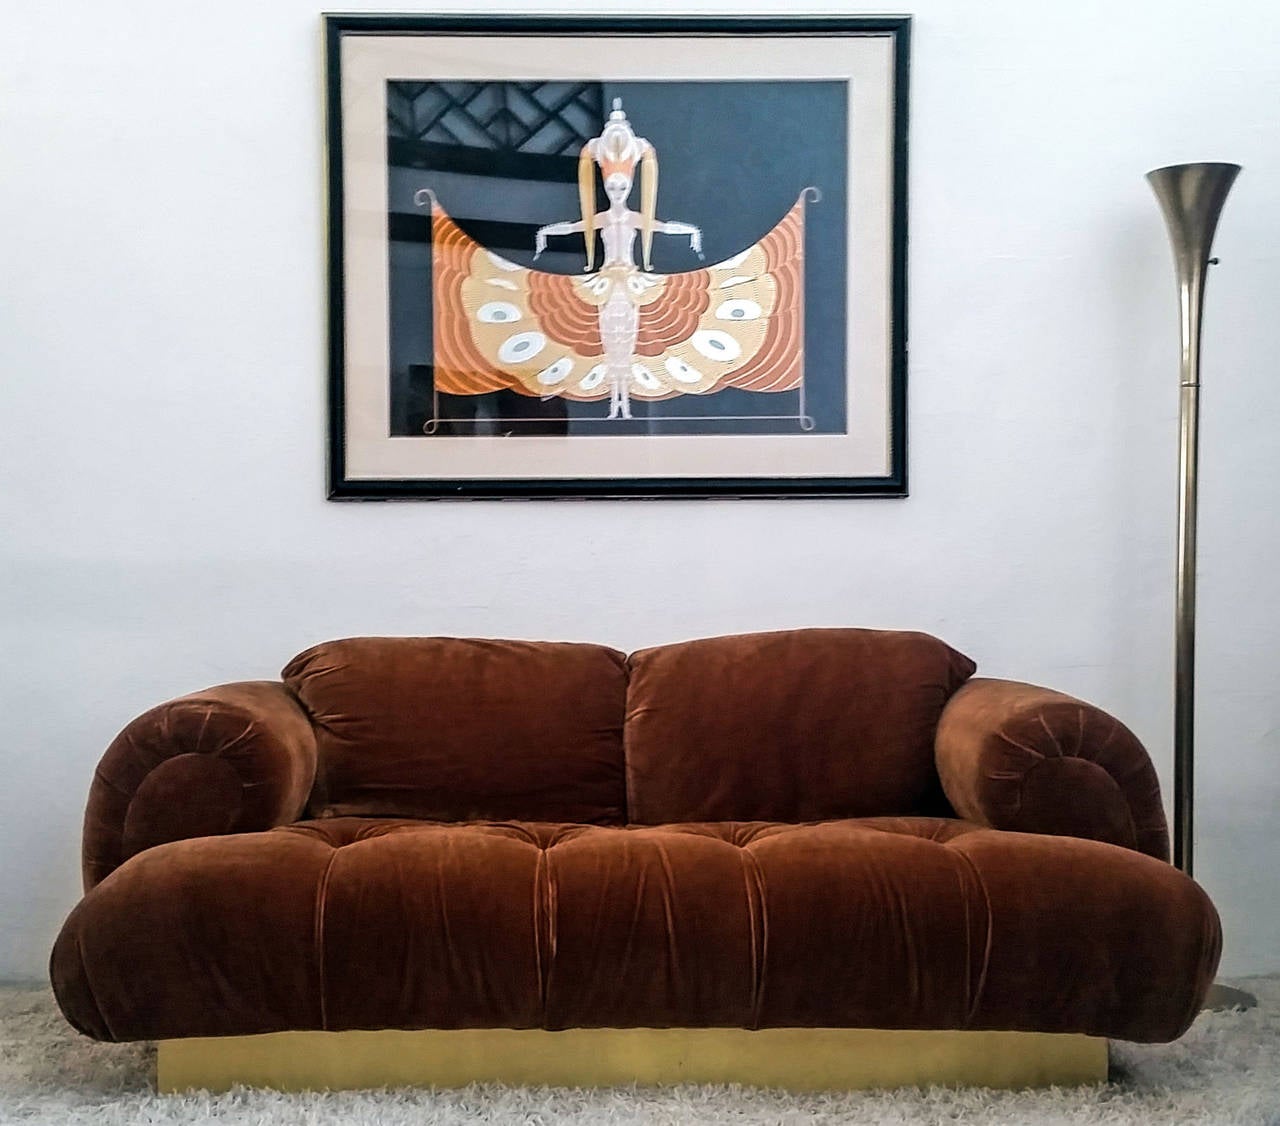 70s inspired sofa